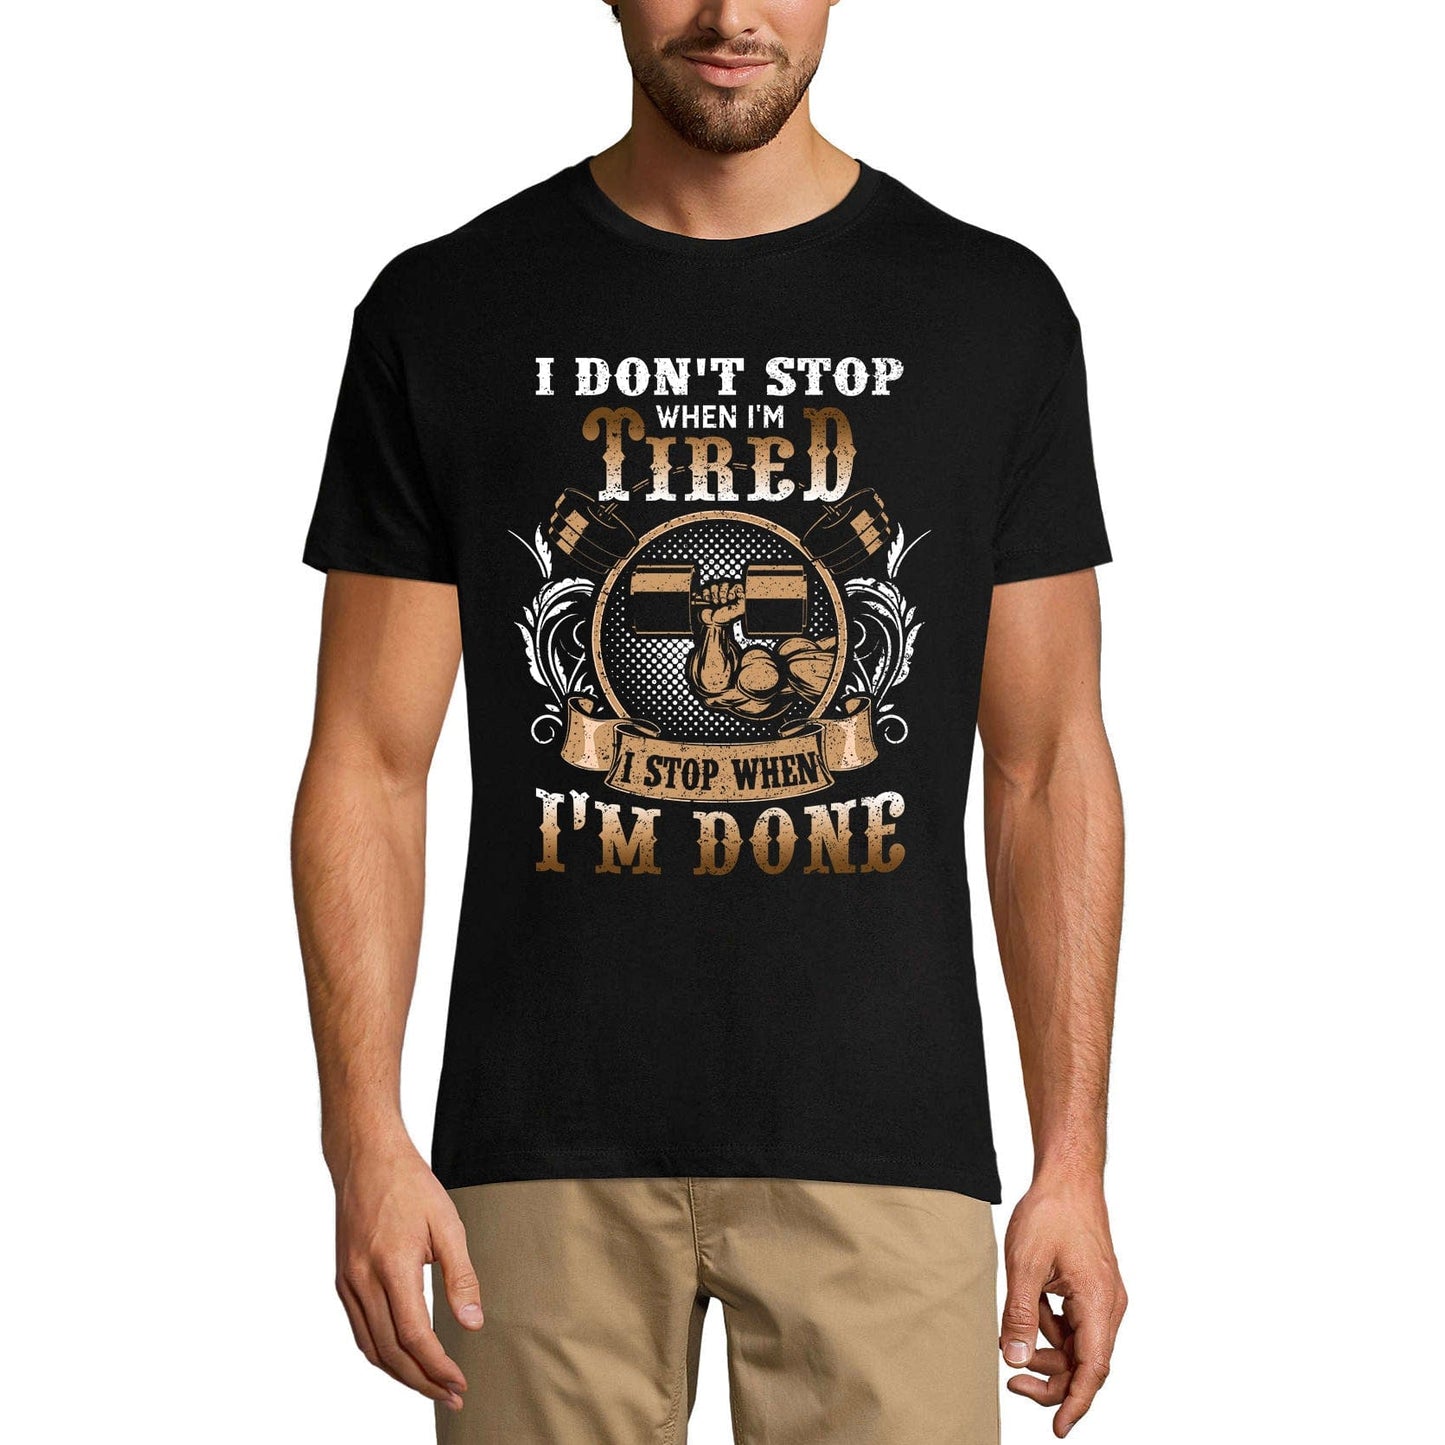 ULTRABASIC Men's T-Shirt I Stop When I'm Done - Motivational Saying Funny Gym Shirt